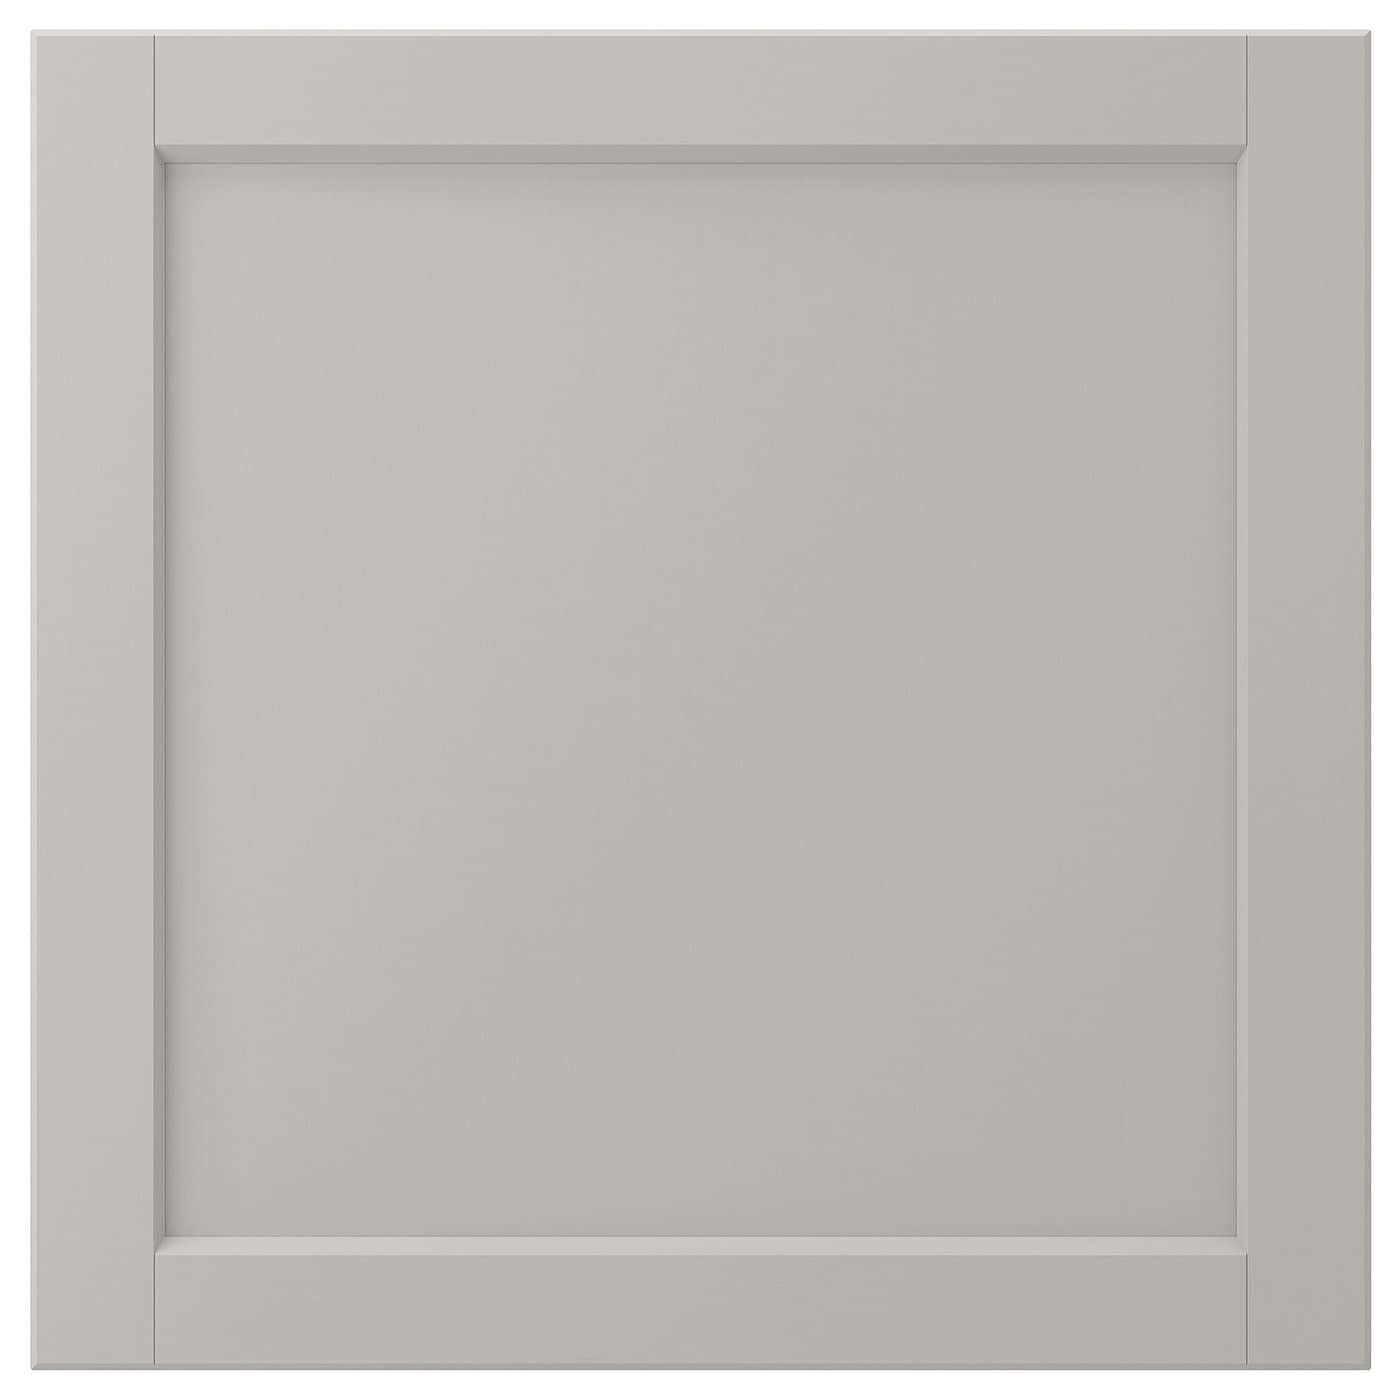 Дверца - IKEA LERHYTTAN, 60х60 см, светло-серый, ЛЕРХЮТТАН ИКЕА